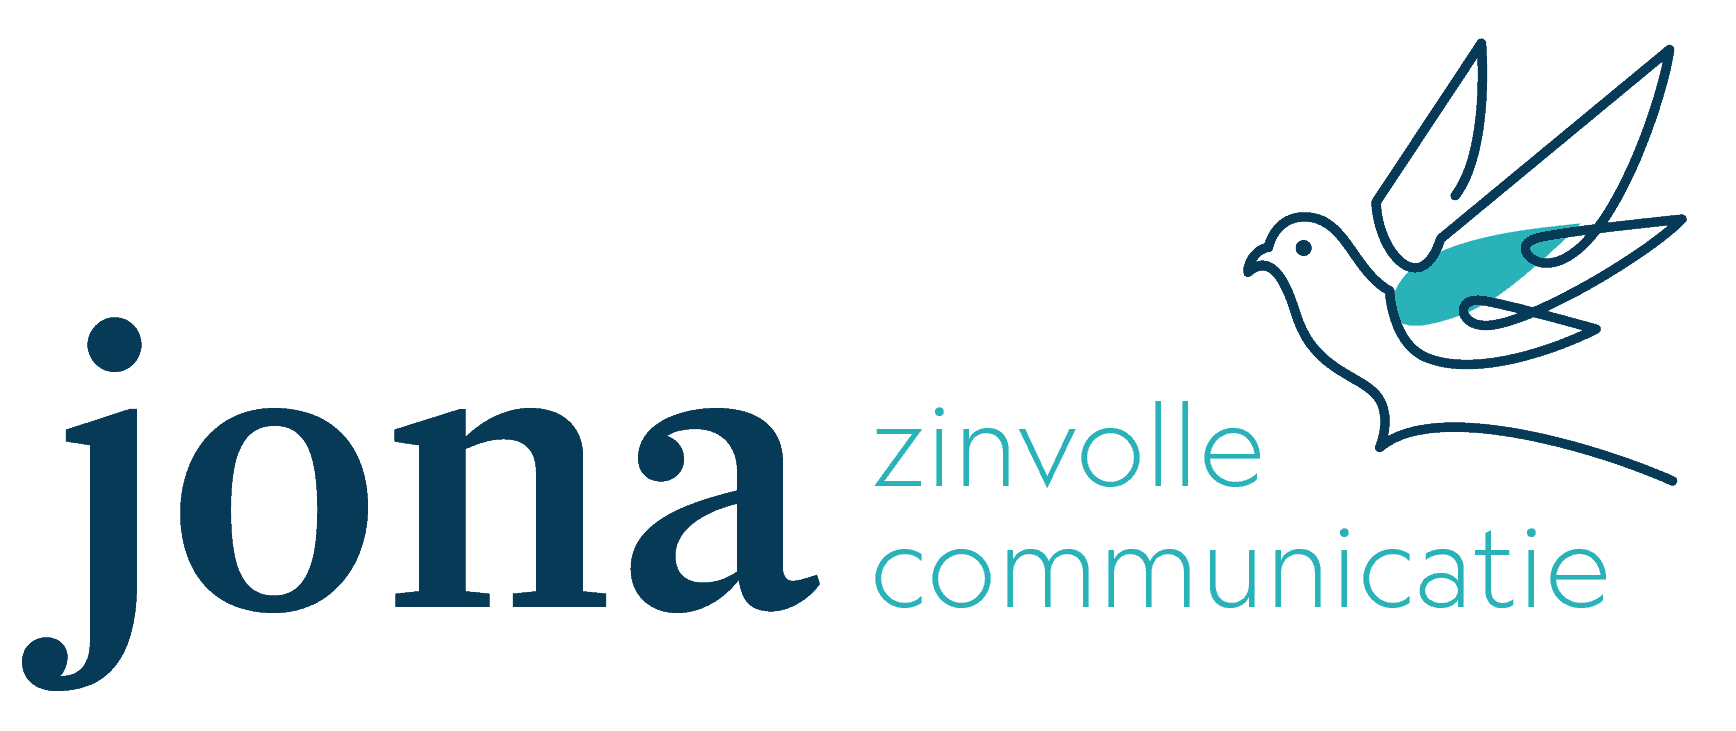 Jona zinvolle communicatie logo